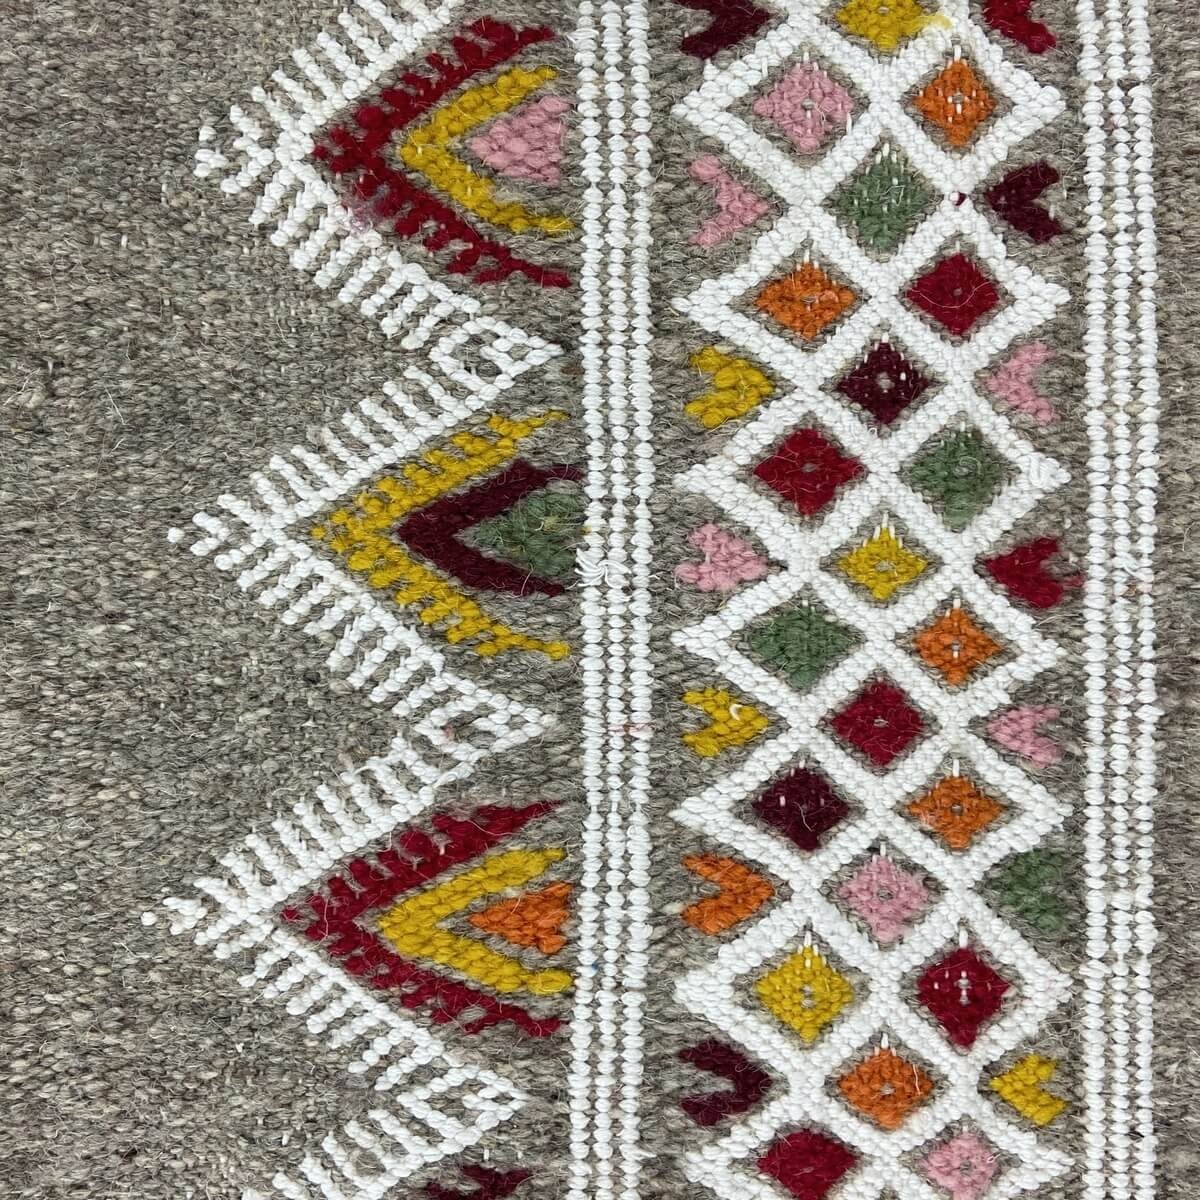 Berber tapijt Tapijt Kilim Alissa 110x190 Grijs/Veelkleurig (Handgeweven, Wol, Tunesië) Tunesisch kilimdeken, Marokkaanse stijl.